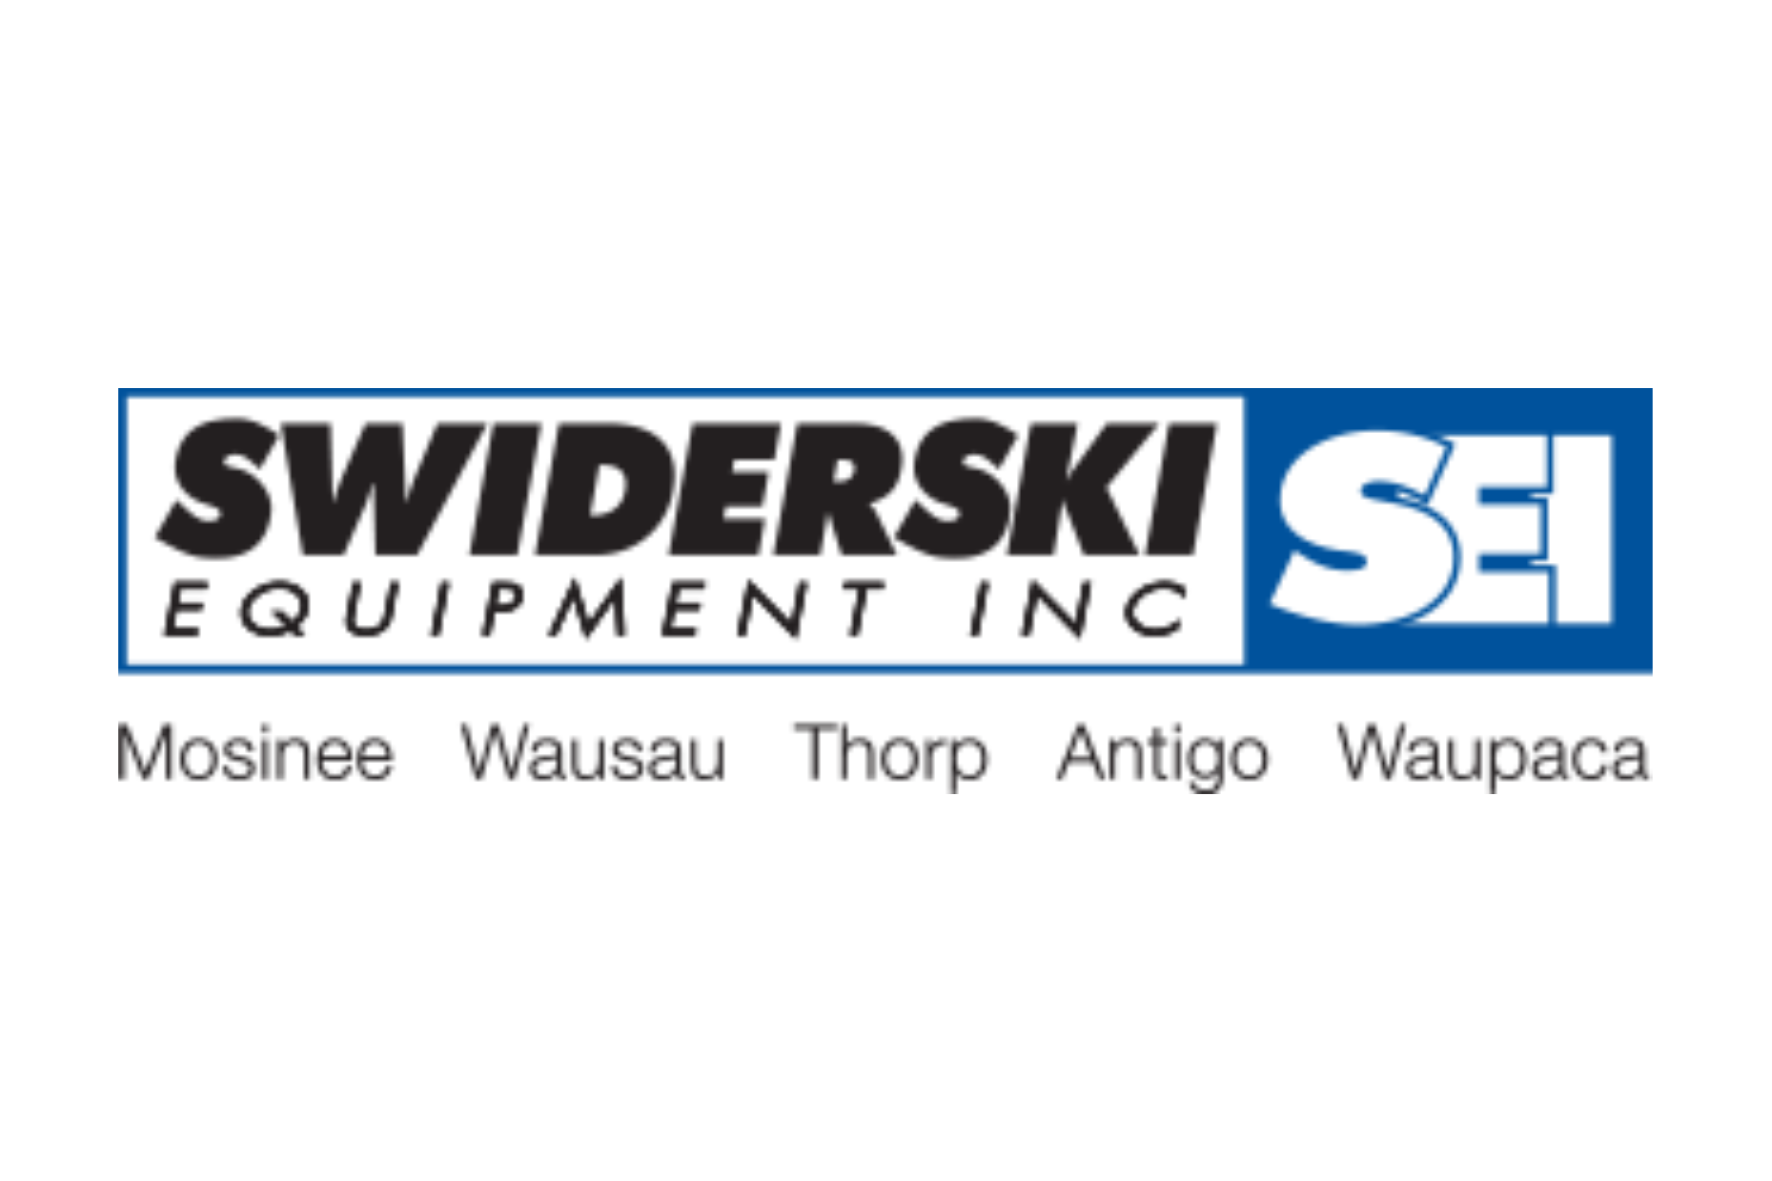 SEI (Swiderski Equipment Inc)